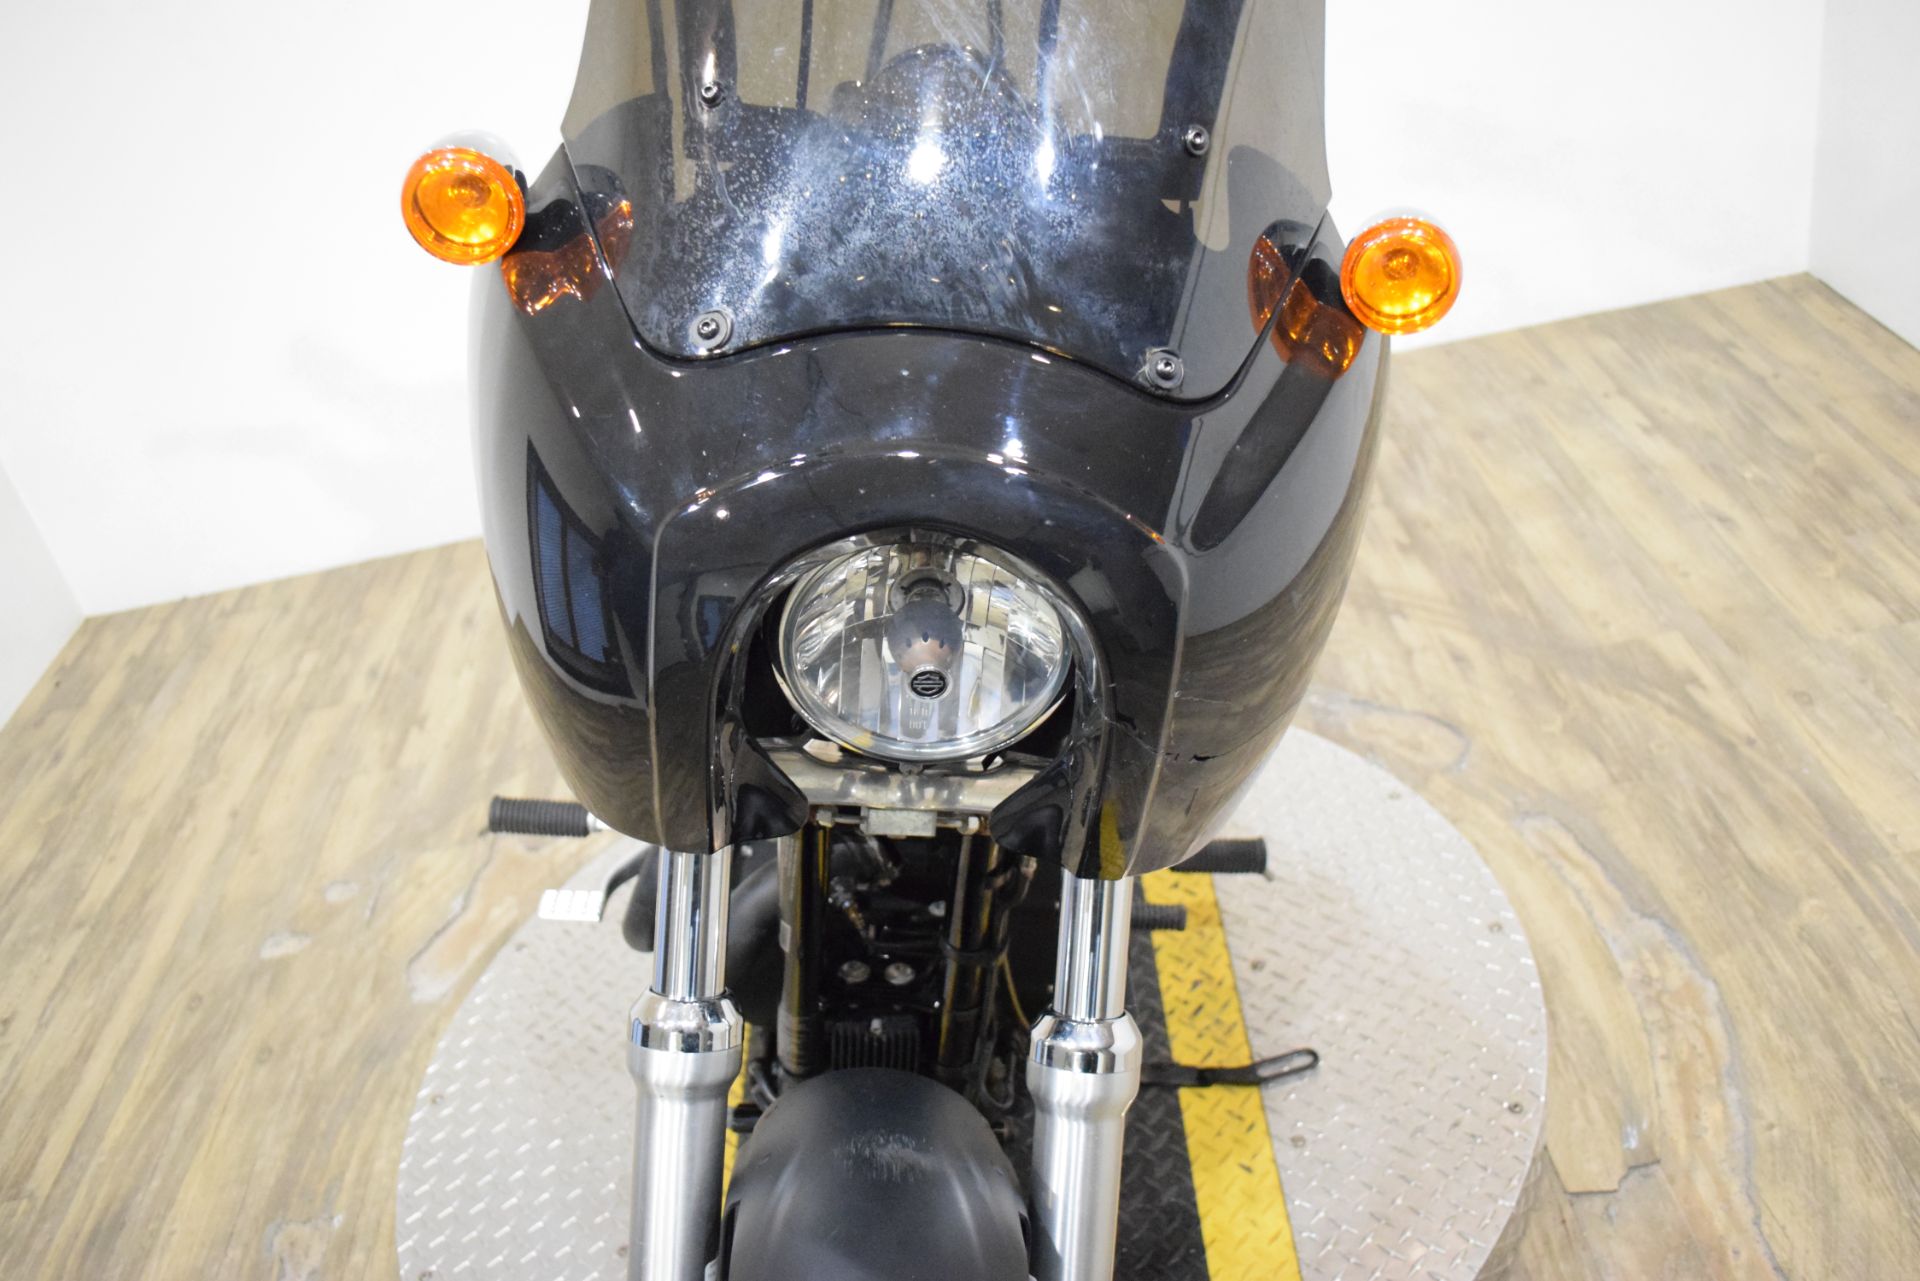 2014 Harley-Davidson 1200 Custom in Wauconda, Illinois - Photo 12